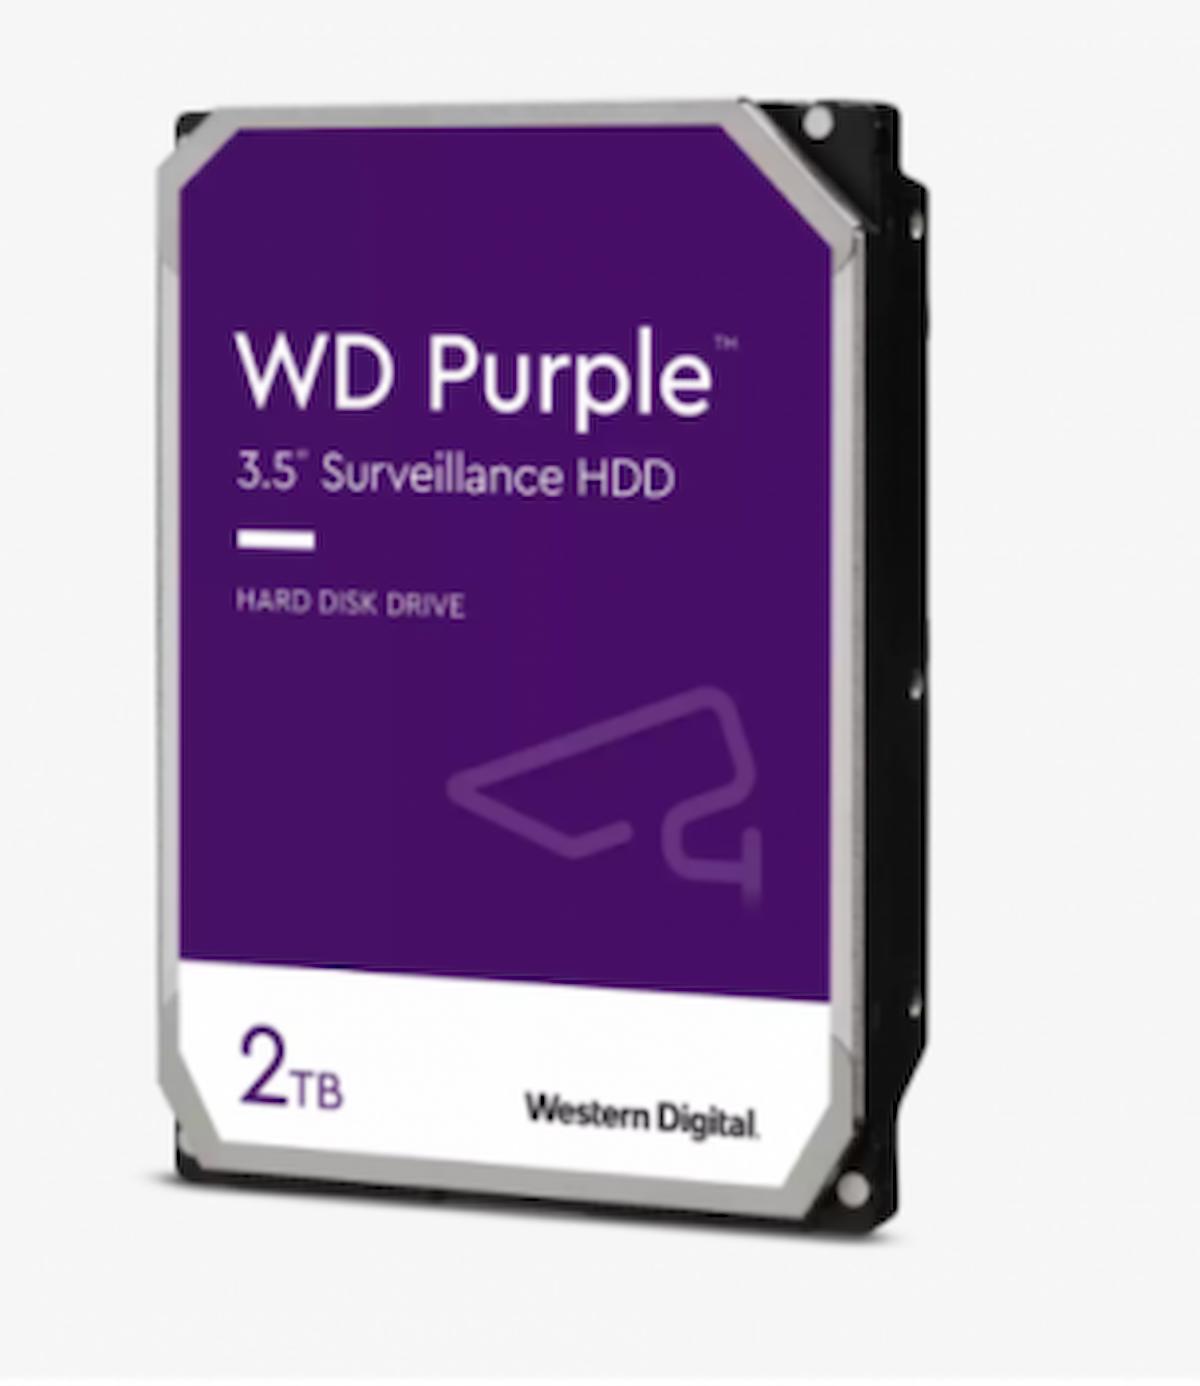 Western Digital WD Purple WD23PURZ 2 TB 3.5 inç 5400 RPM 64 MB SATA 3.0 Güvenlik Kamerası Harddisk